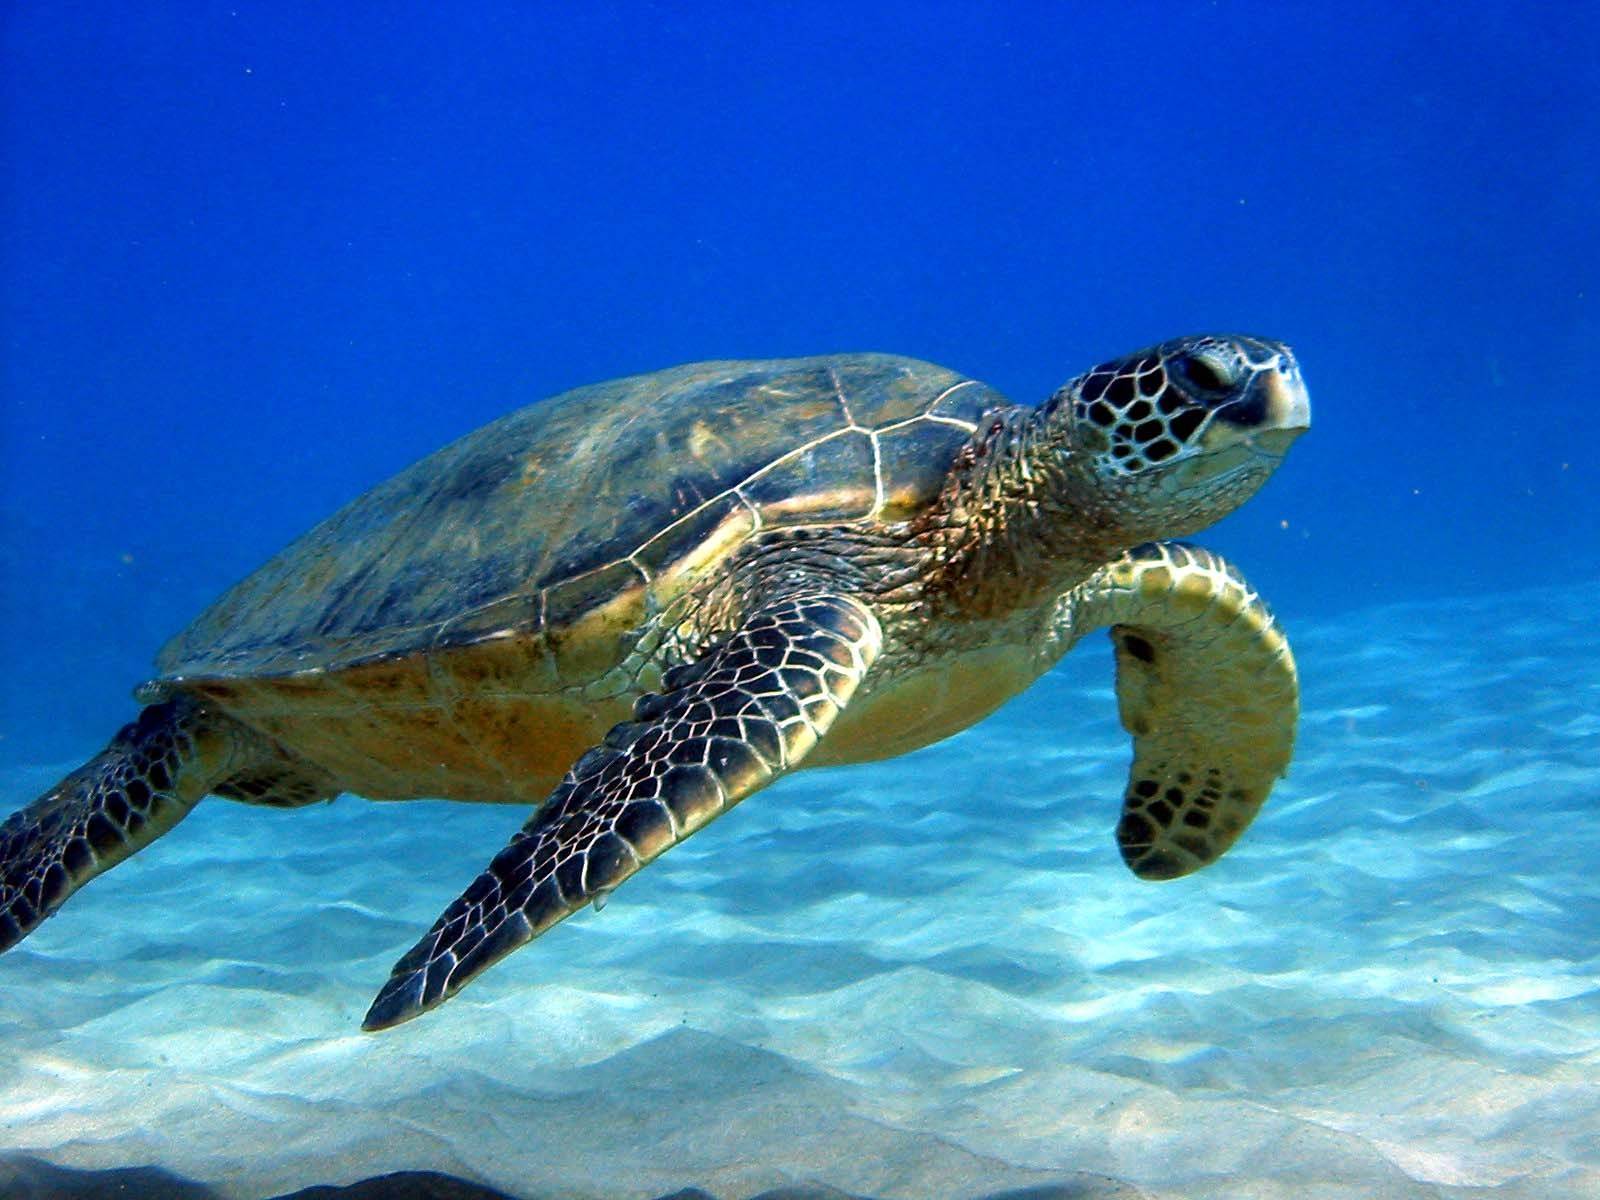 Loma Linda University researchers expand sea turtle research ...